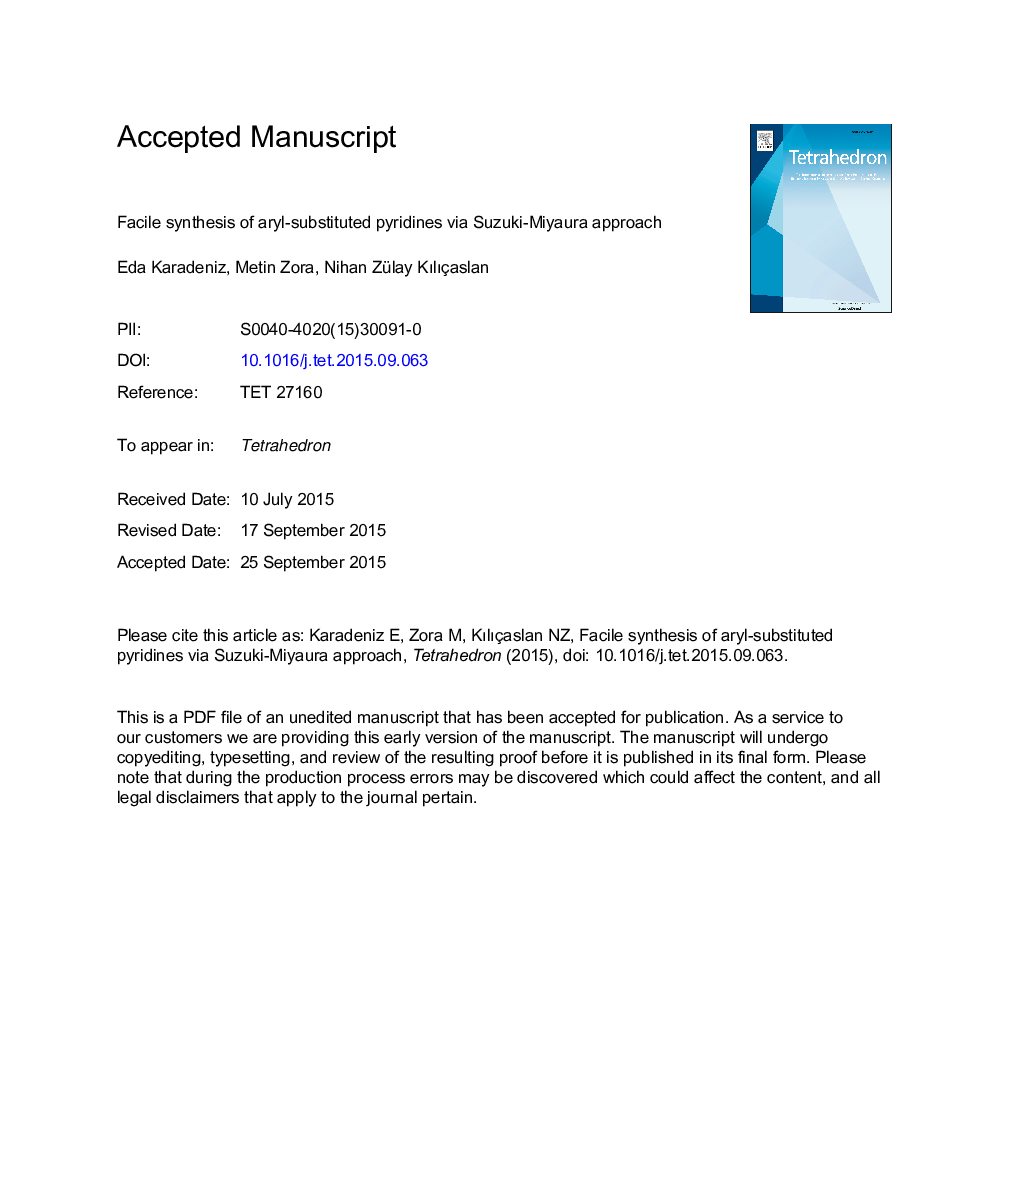 Facile synthesis of aryl-substituted pyridines via Suzuki-Miyaura approach